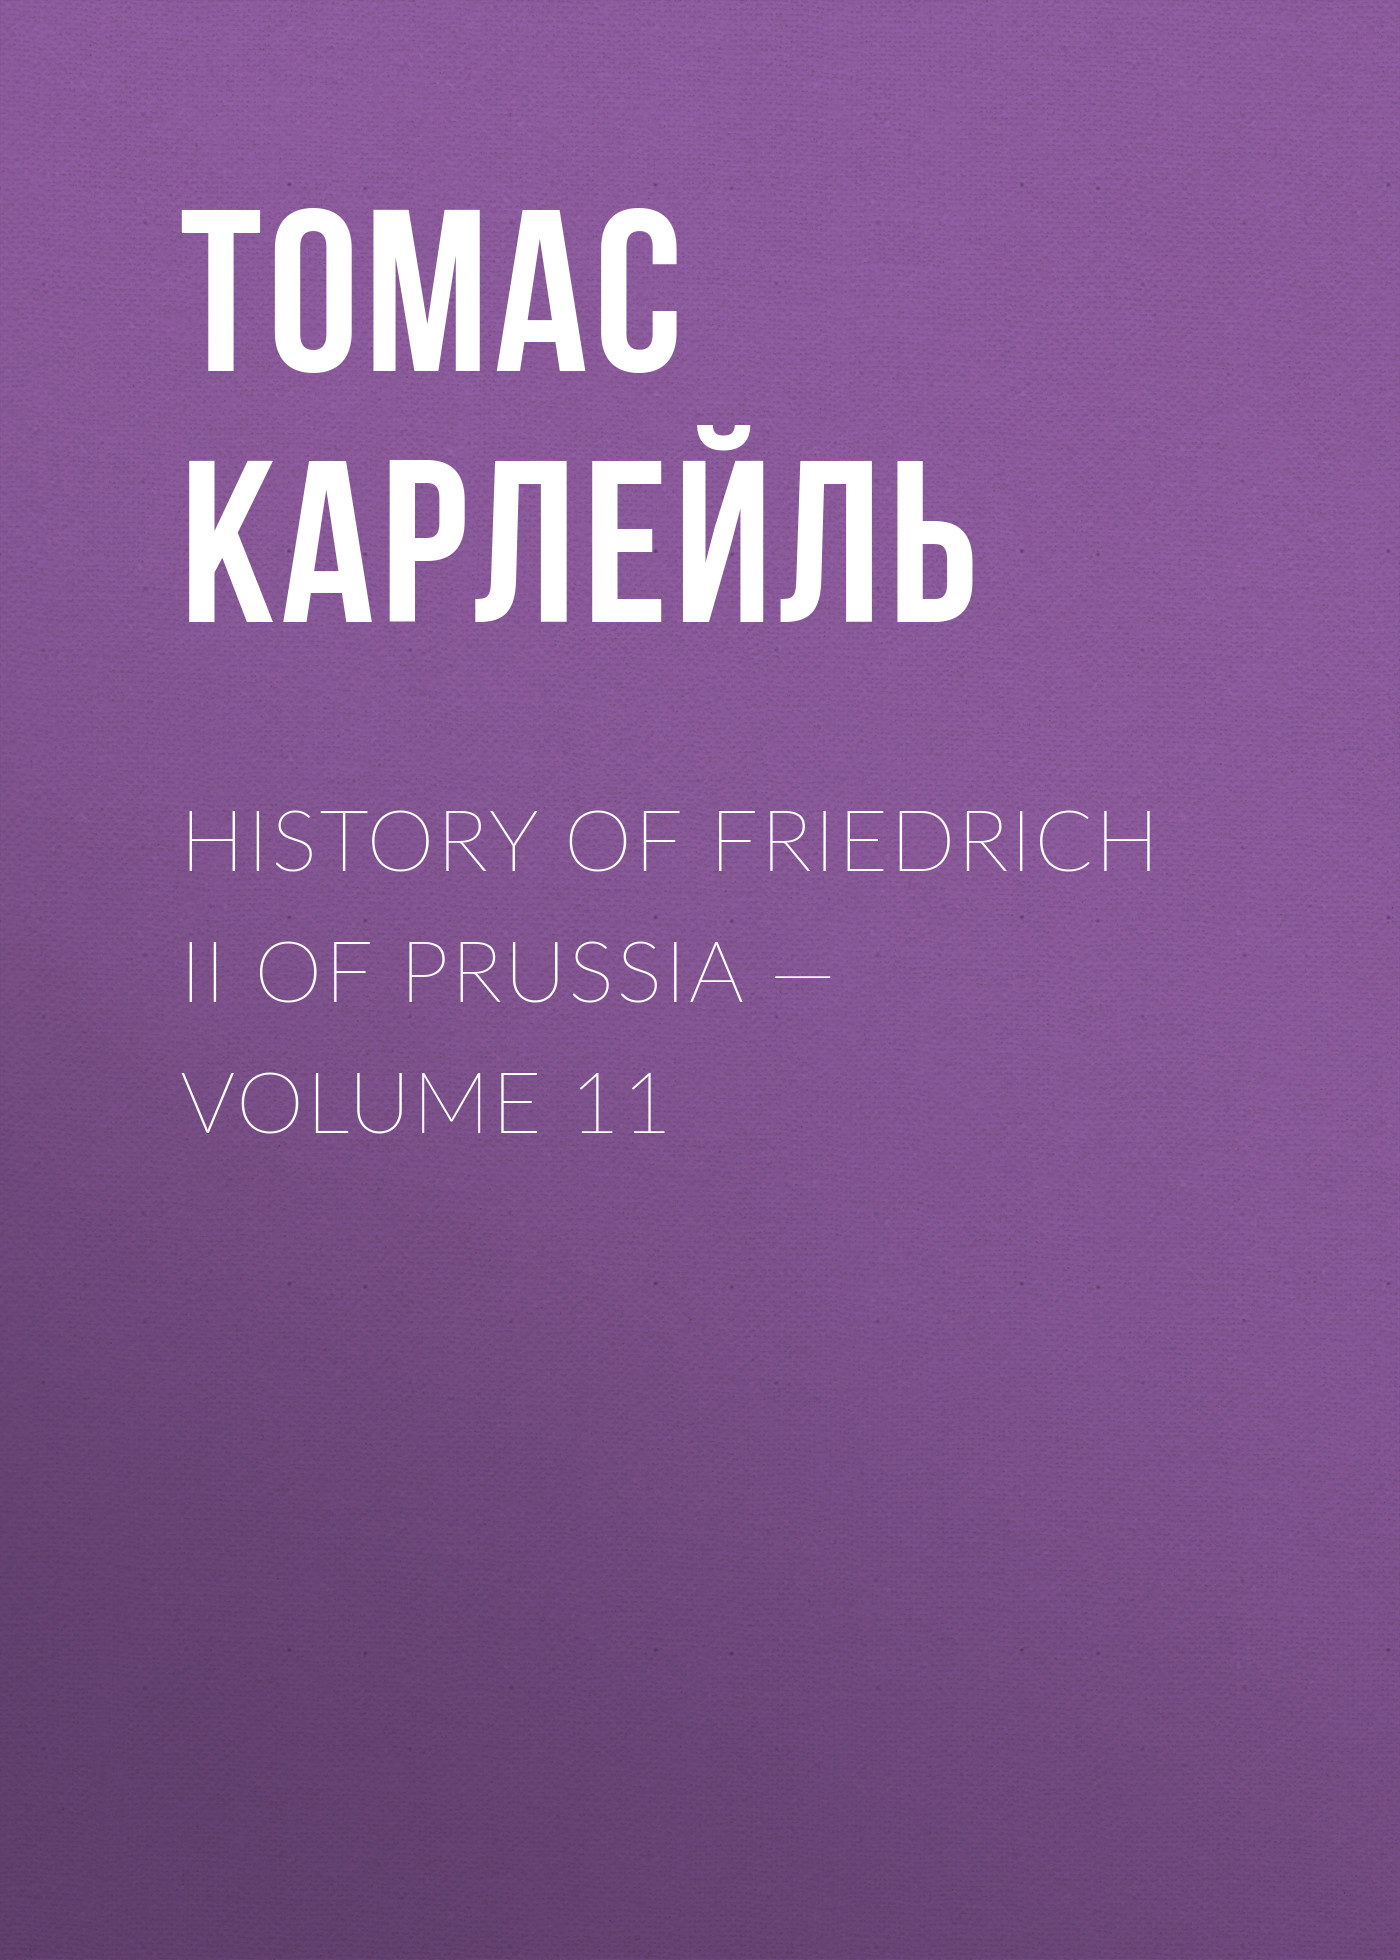 History of Friedrich II of Prussia— Volume 11